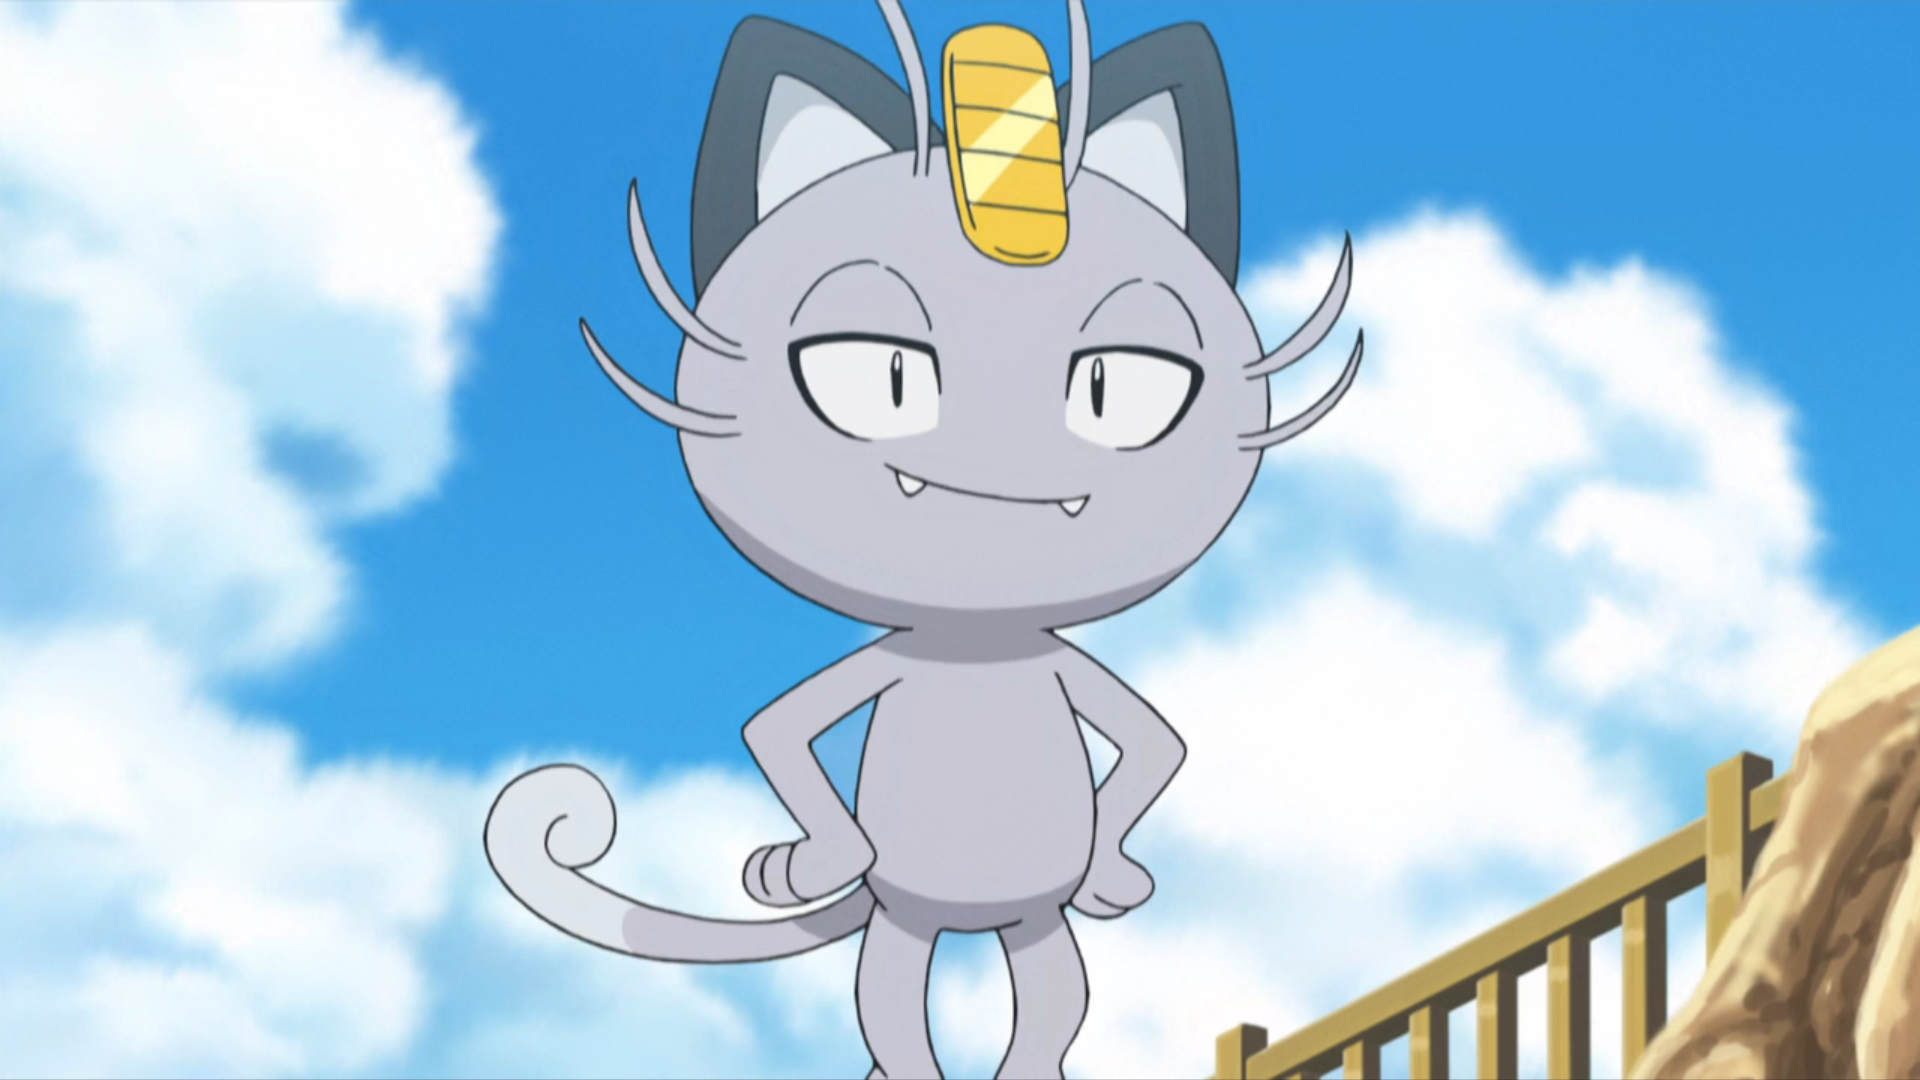 Saga Prefecture Gets Their 1st Pokémon Manhole Covers Featuring Meowth in a  Balloon - Crunchyroll News